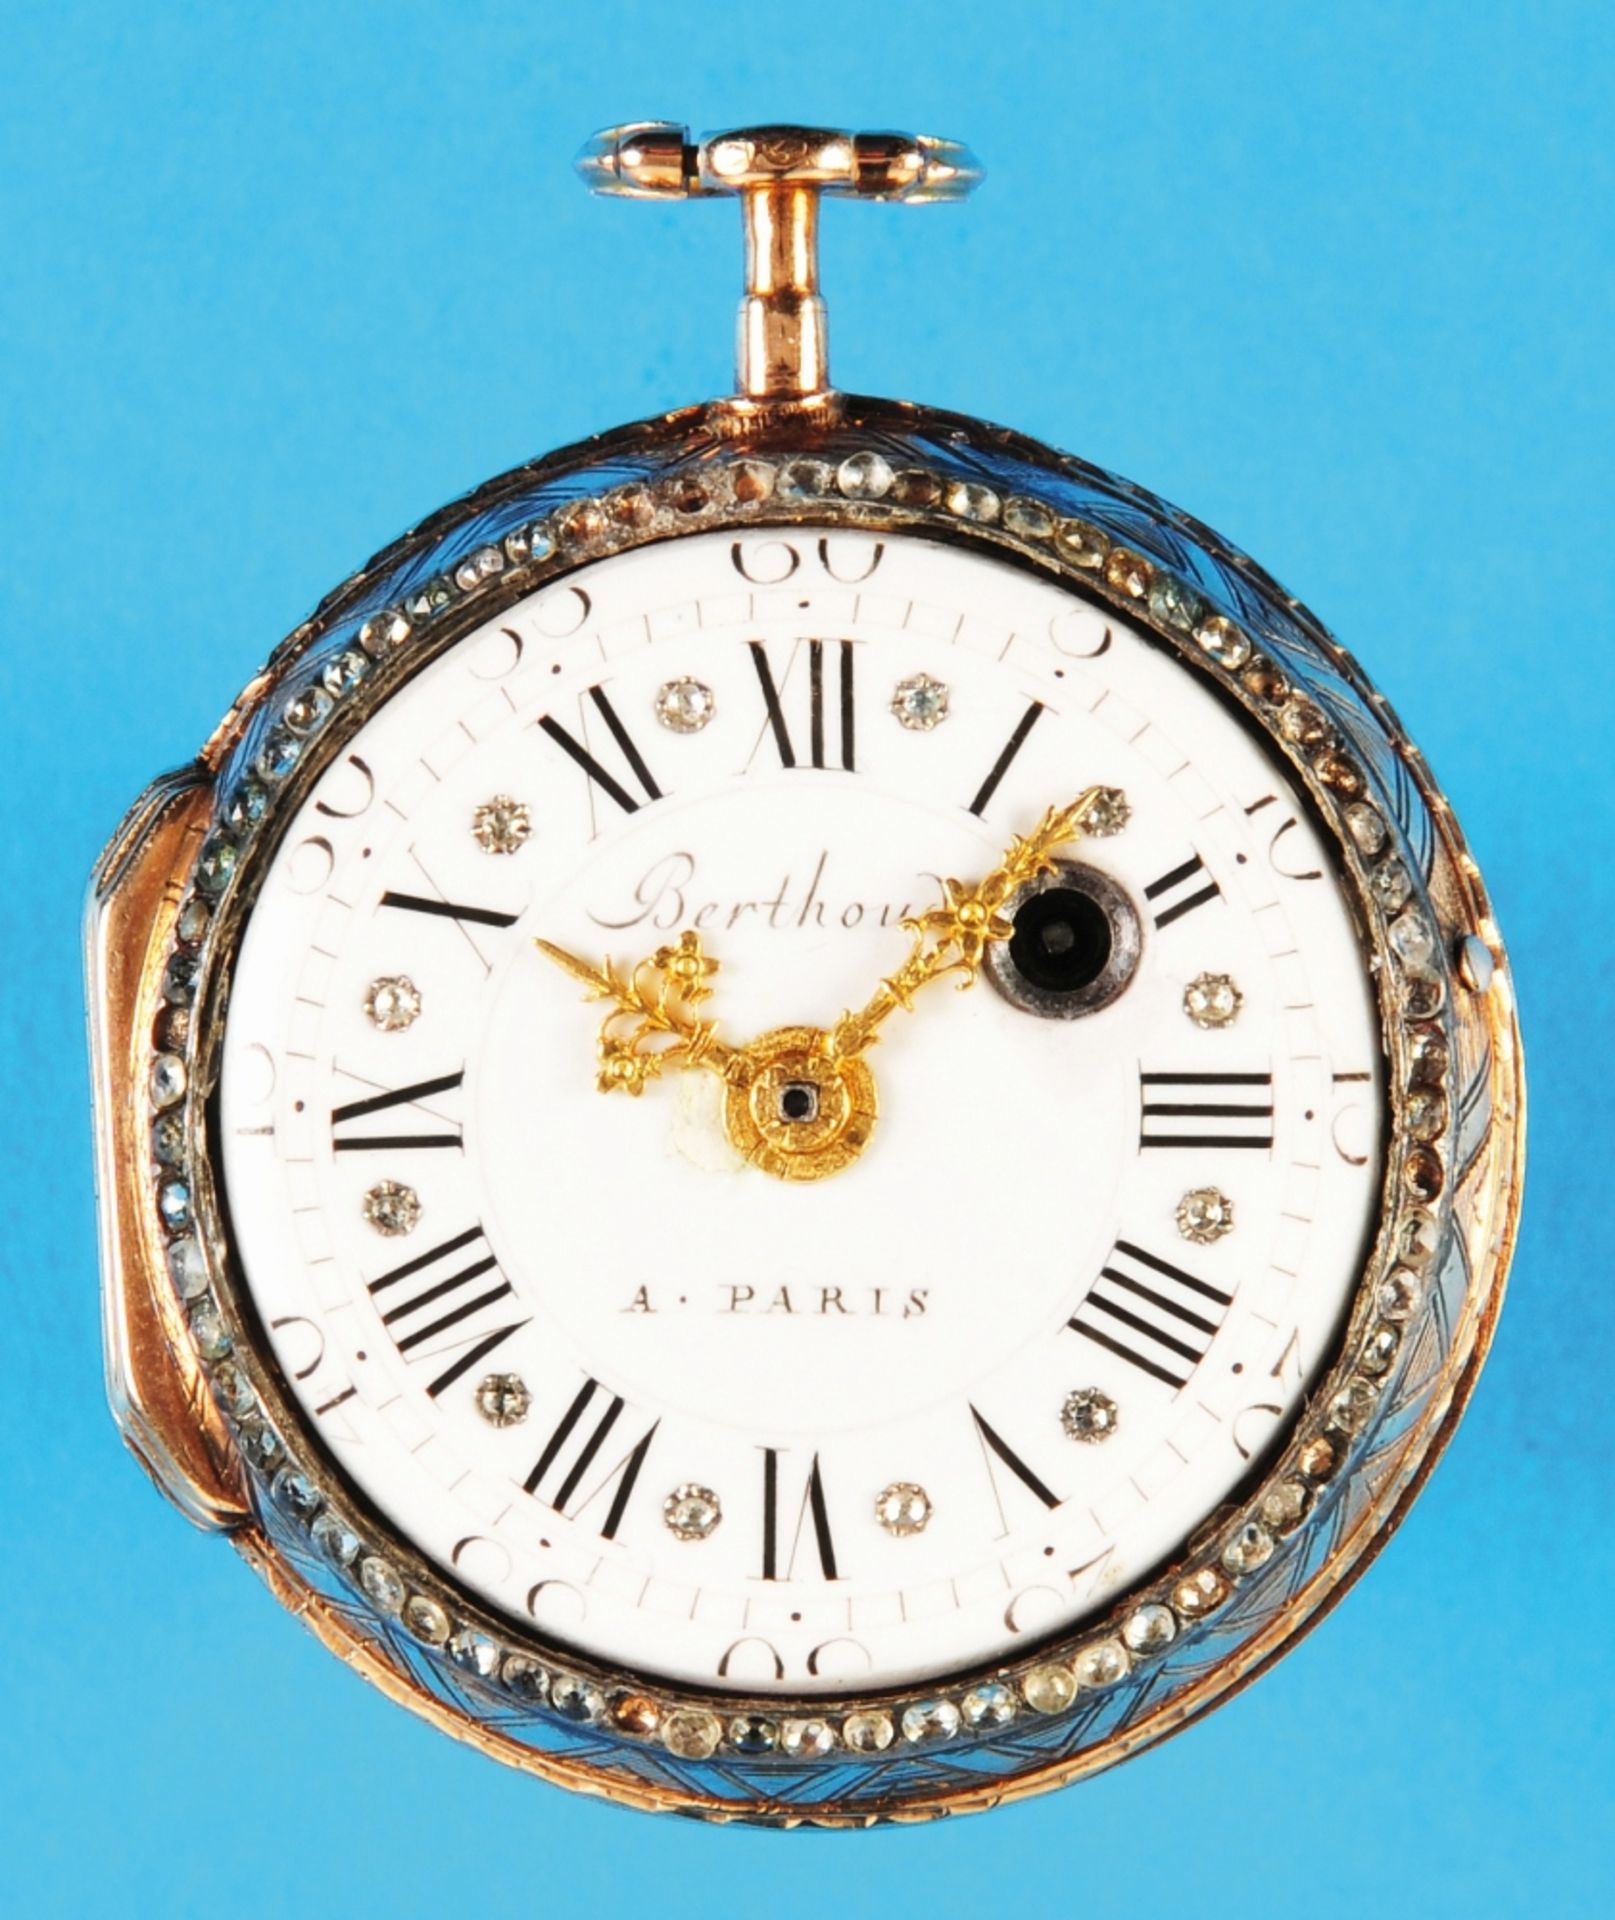 Skeletonized golden pocket watch, Berthoud à Paris